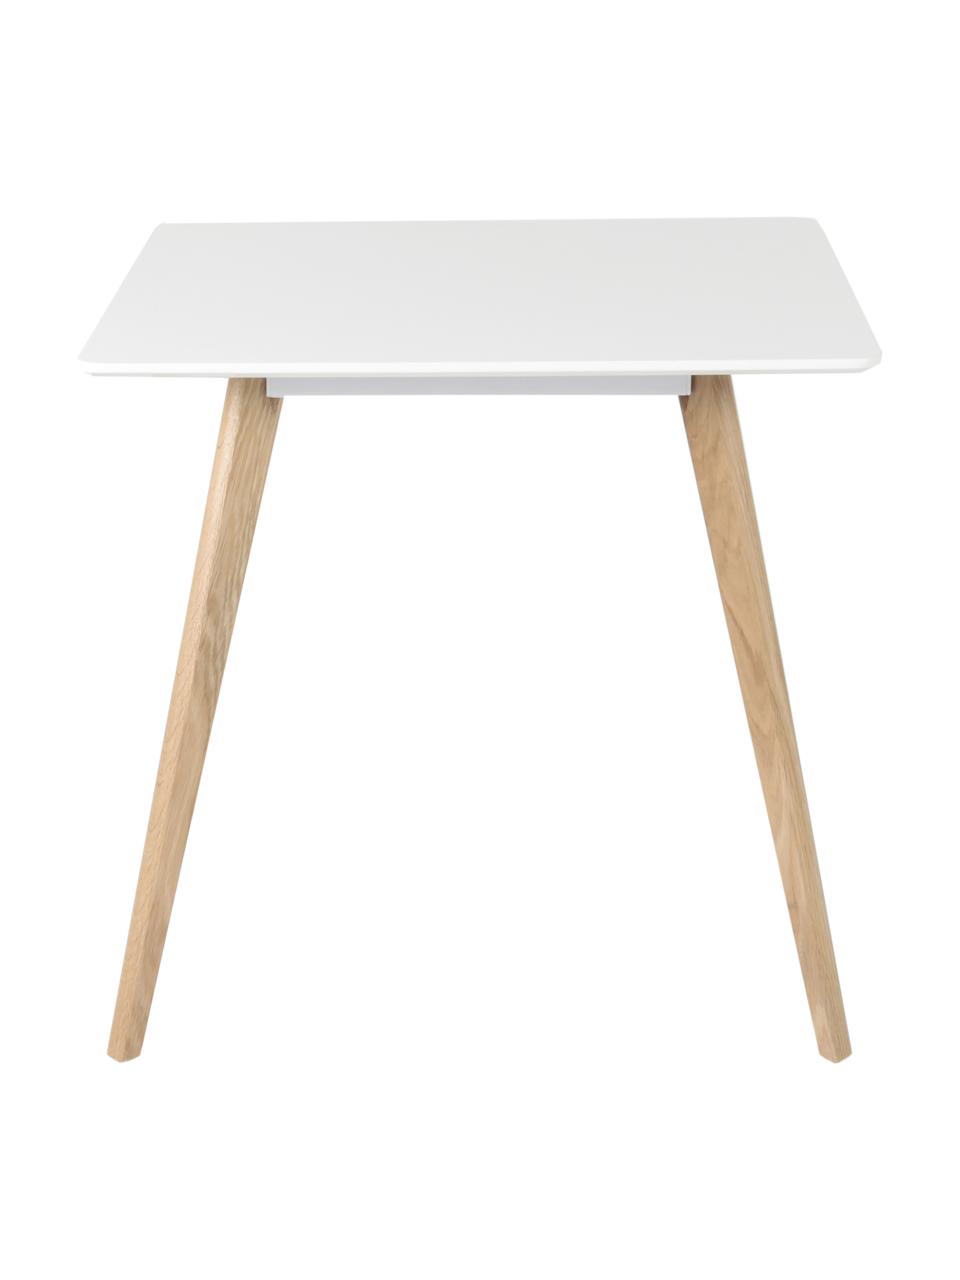 Jídelní stůl Flamy, 80 x 80 cm, Bílá, dub, Š 80 cm, H 80 cm